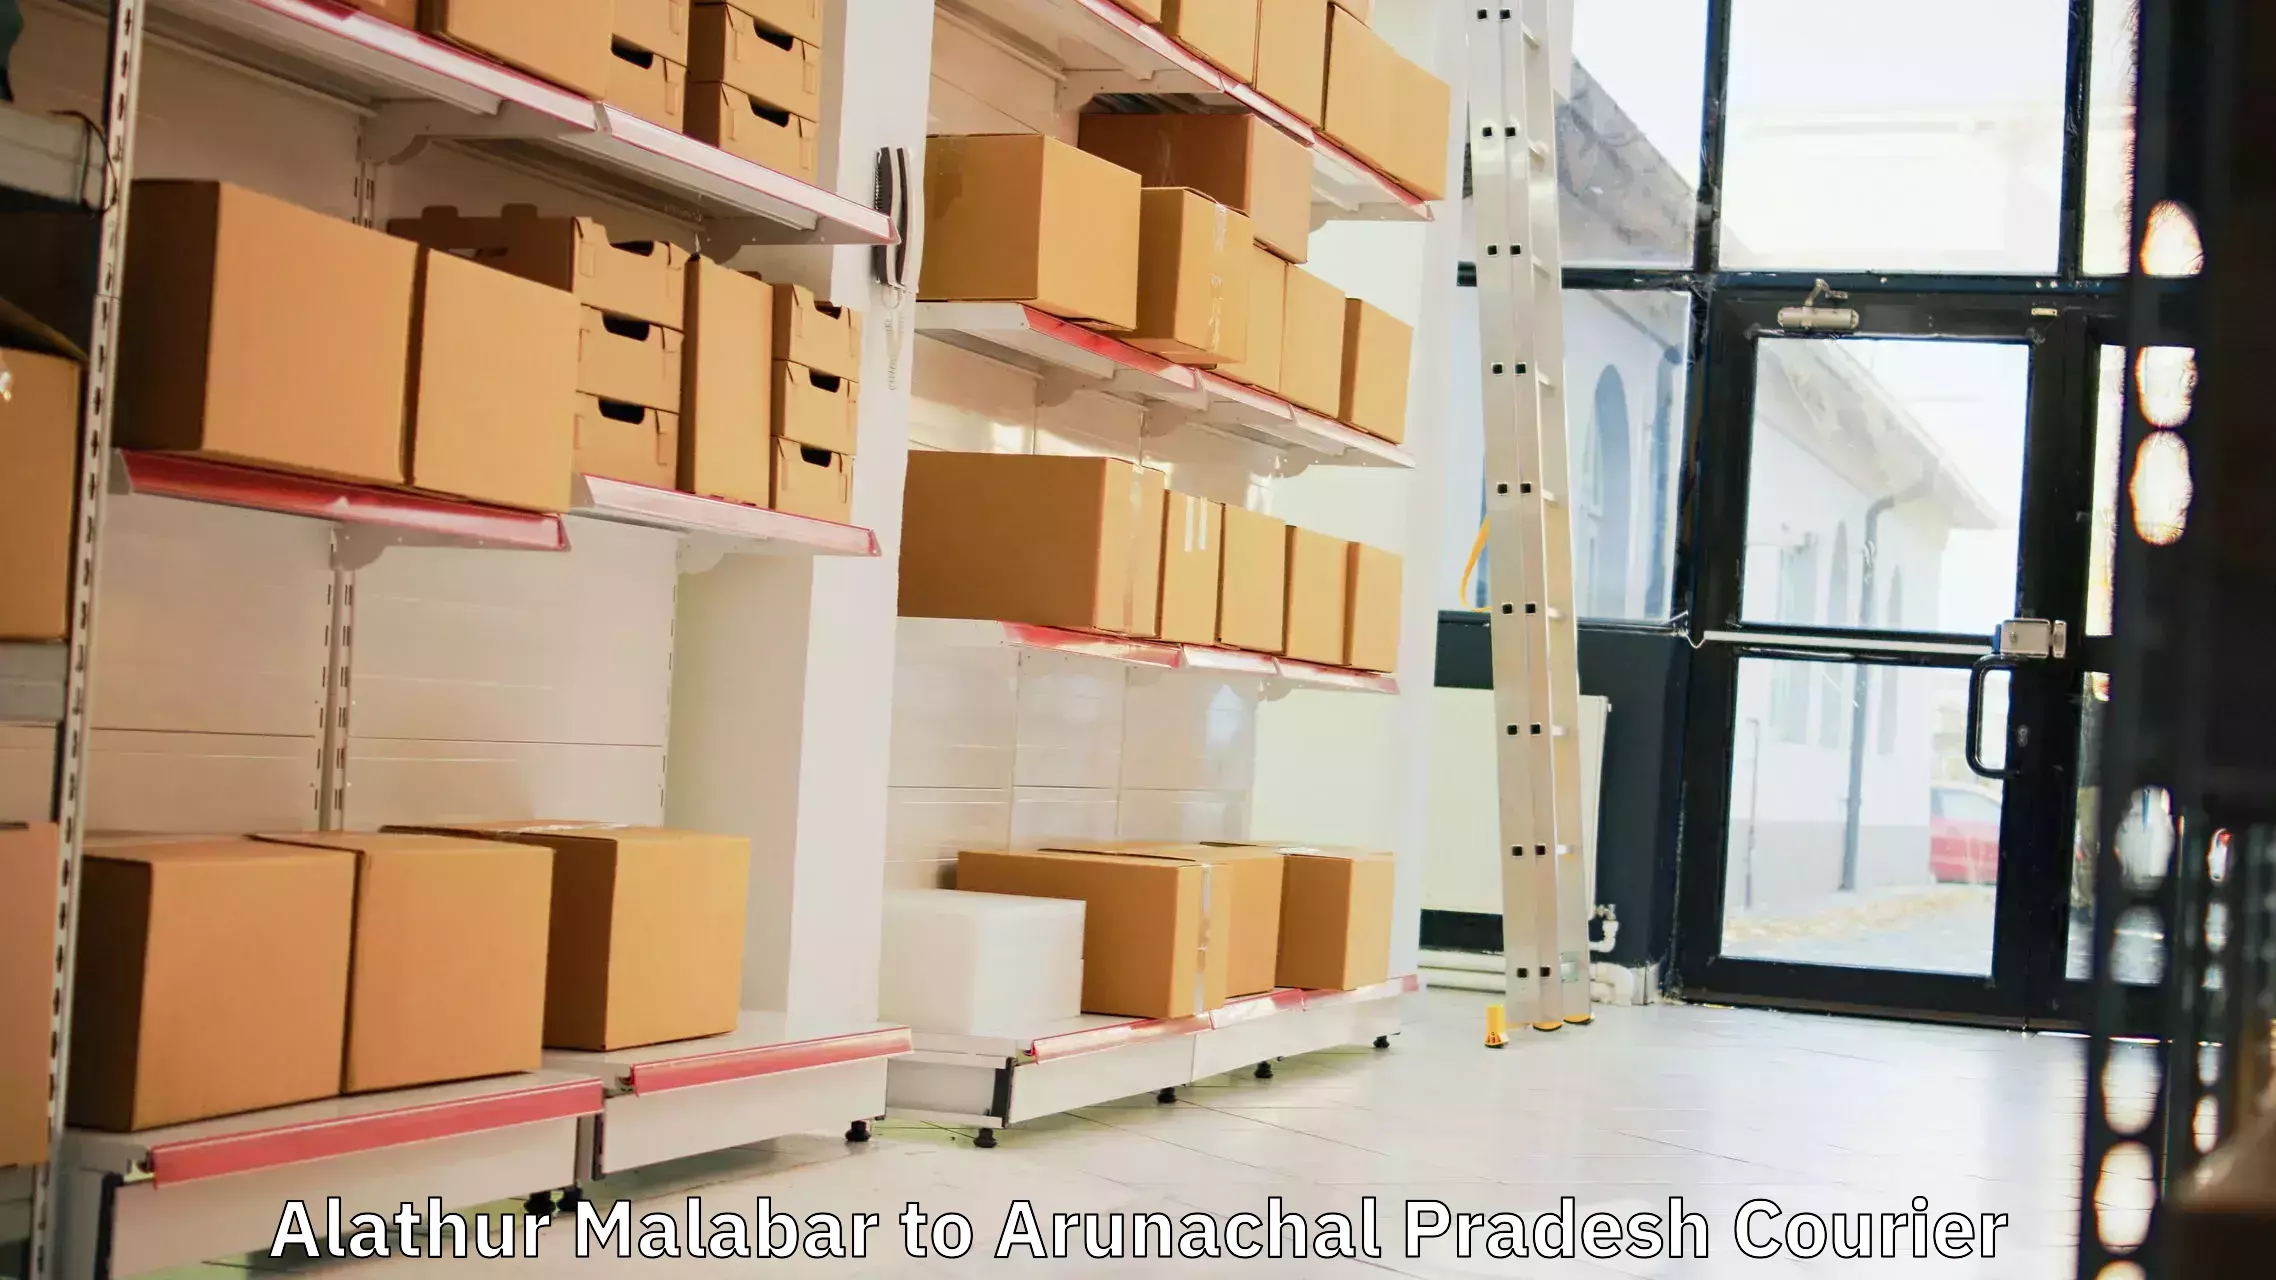 Modern courier technology Alathur Malabar to Arunachal Pradesh